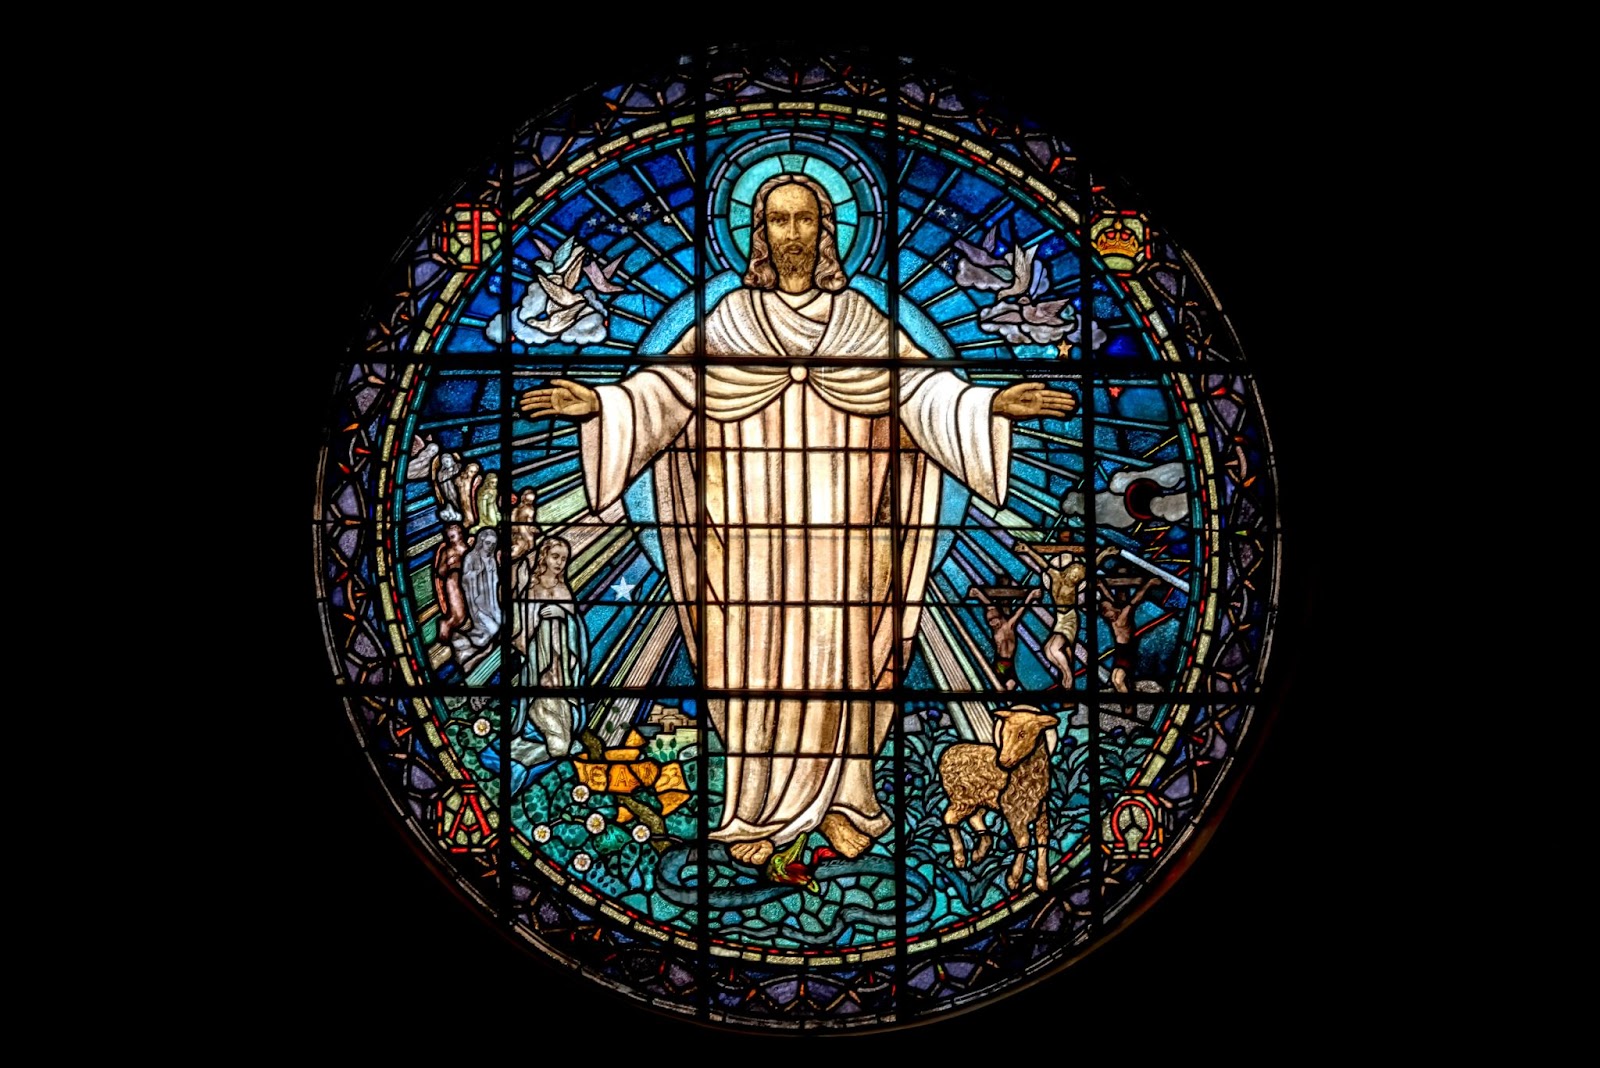 A church mosaic of Jesus Christ